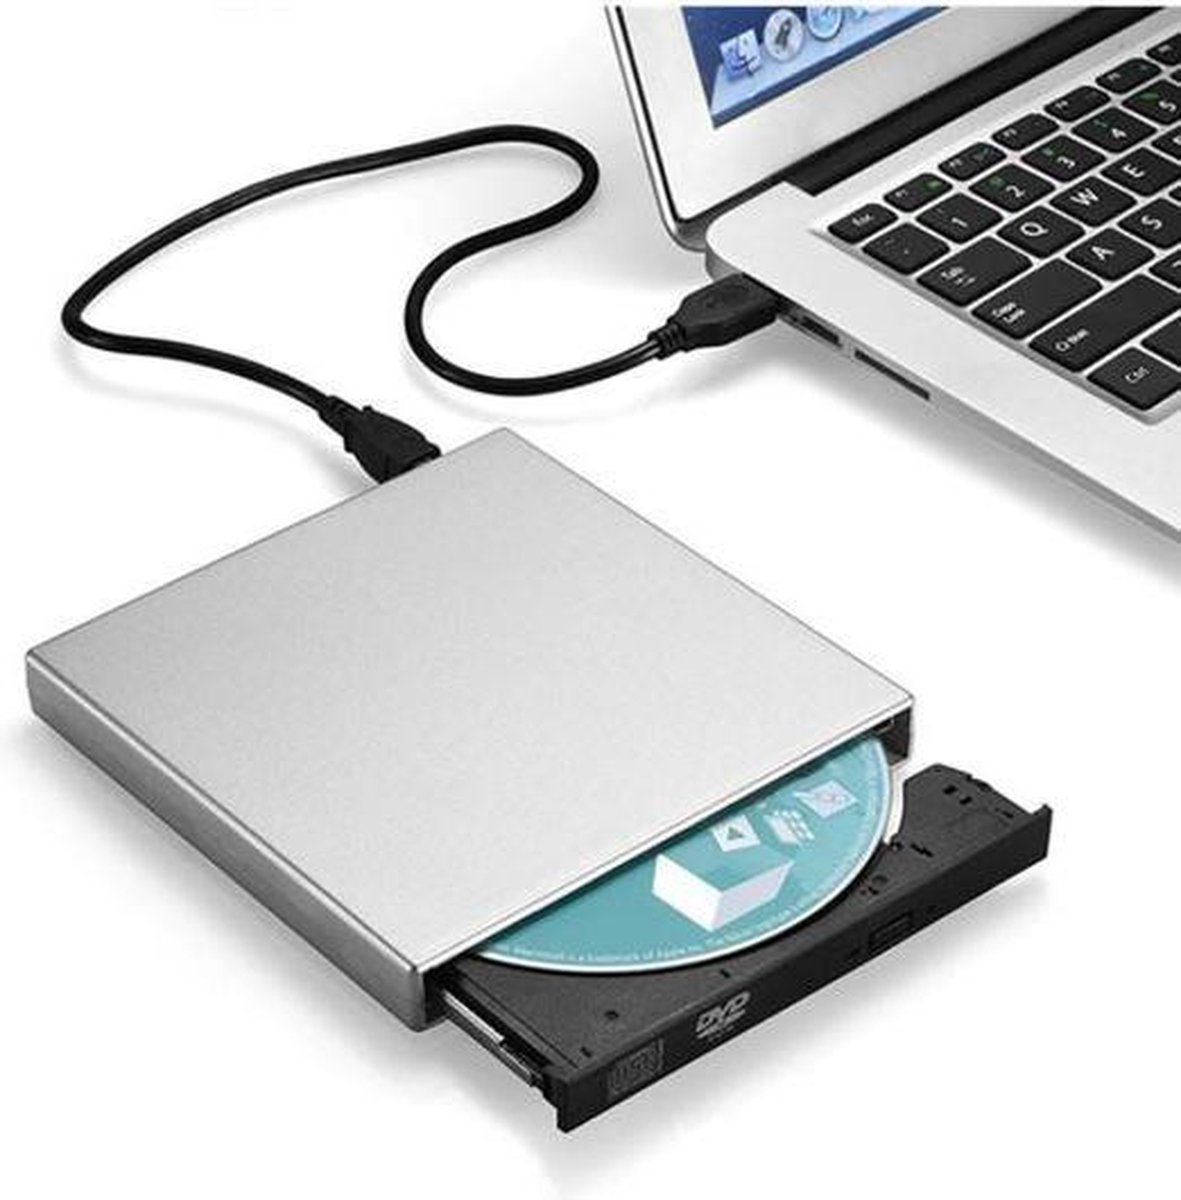 external dvd player/burner for mac